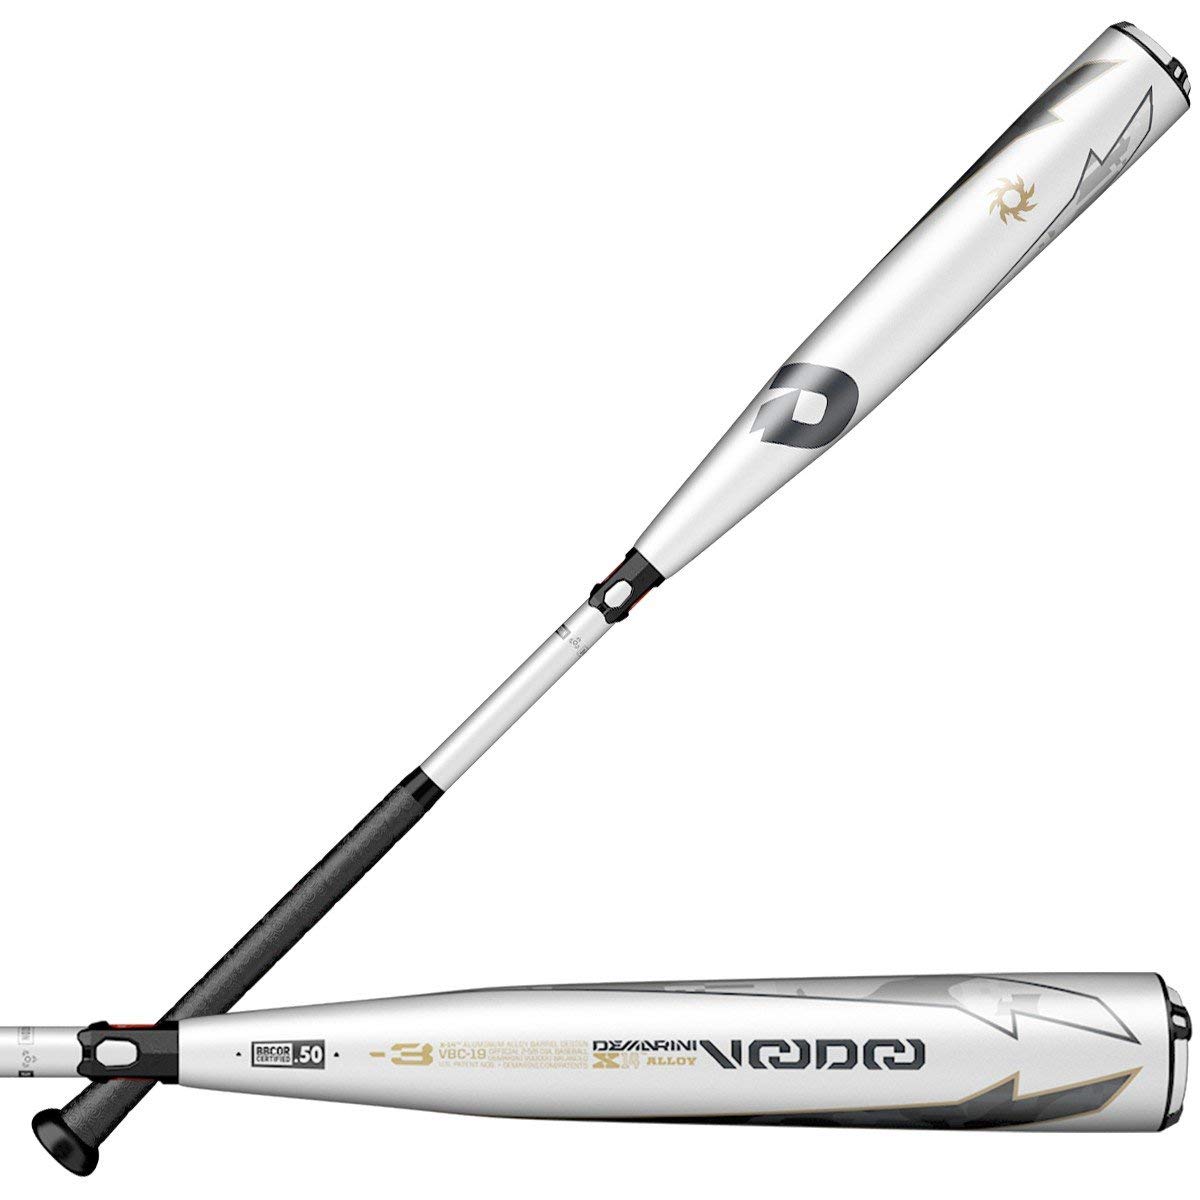 demarini-2019-voodoo-balanced-3-baseball-bat-33-inch-30-oz WTDXVBC3033-19 DeMarini 887768692605 `-3 Length to weight ratio Balanced swing weight Paraflex Plus composite